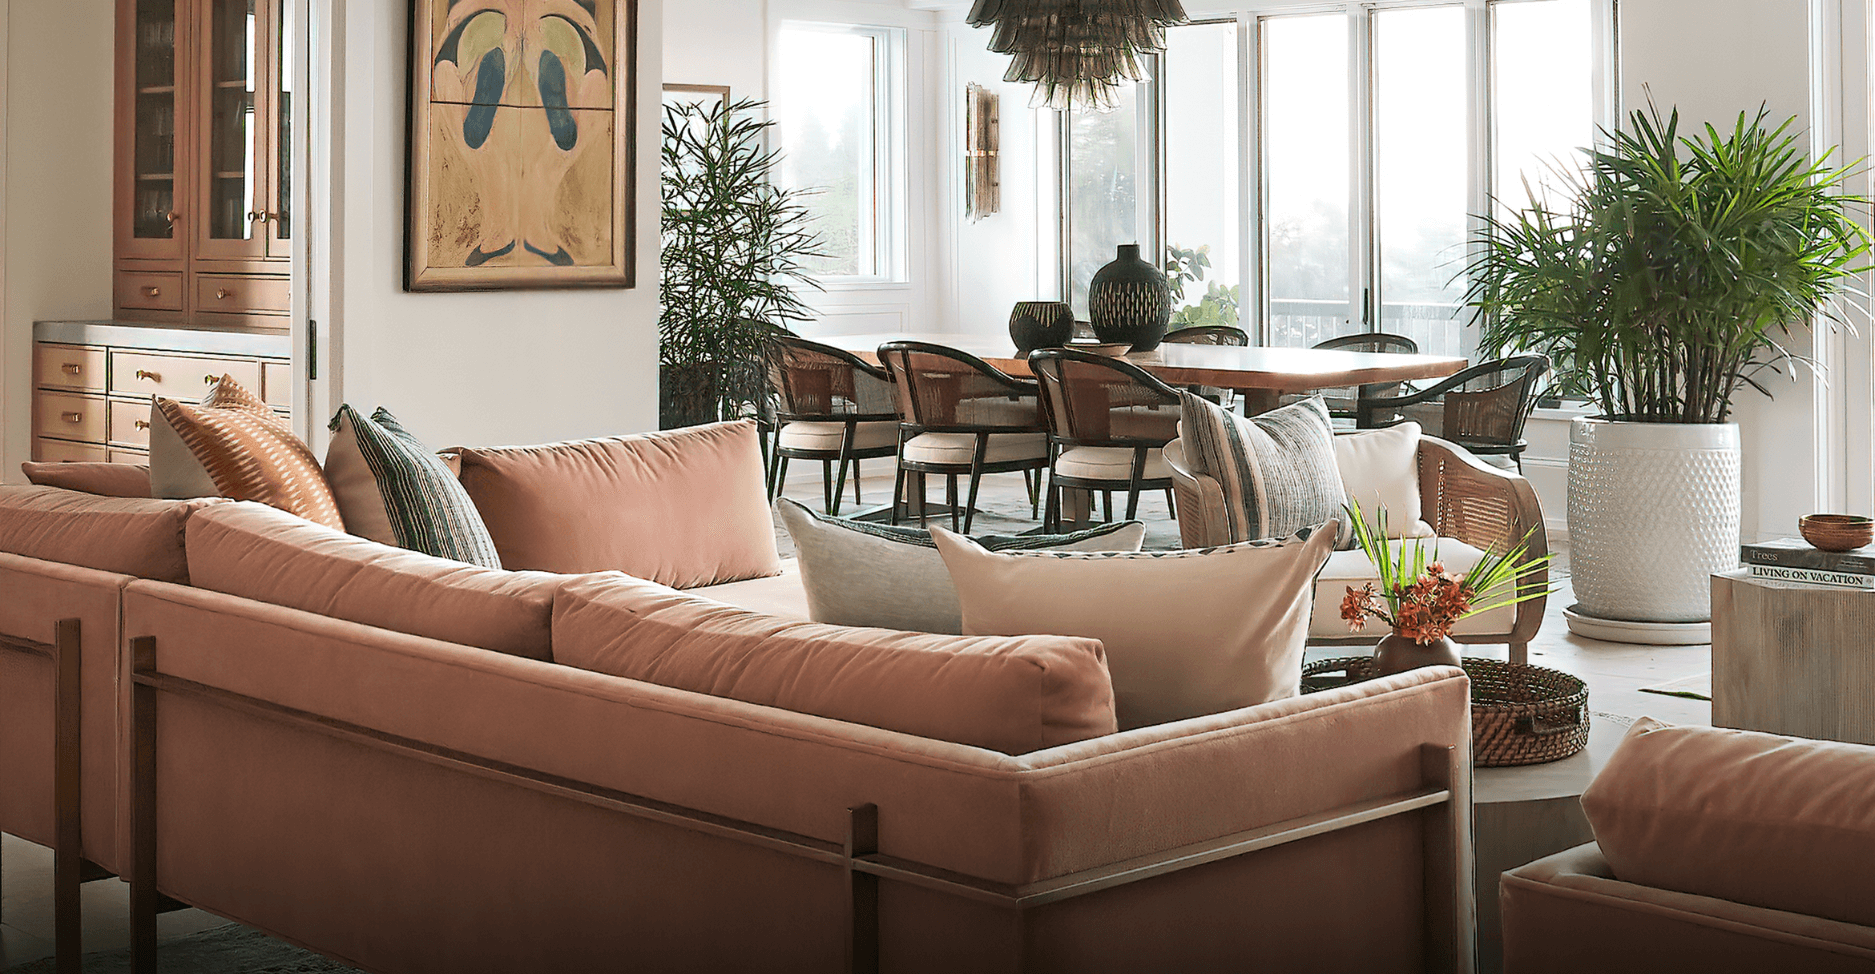 Imparfait Design Studio finished beachy space with pinky peach velvet sofa